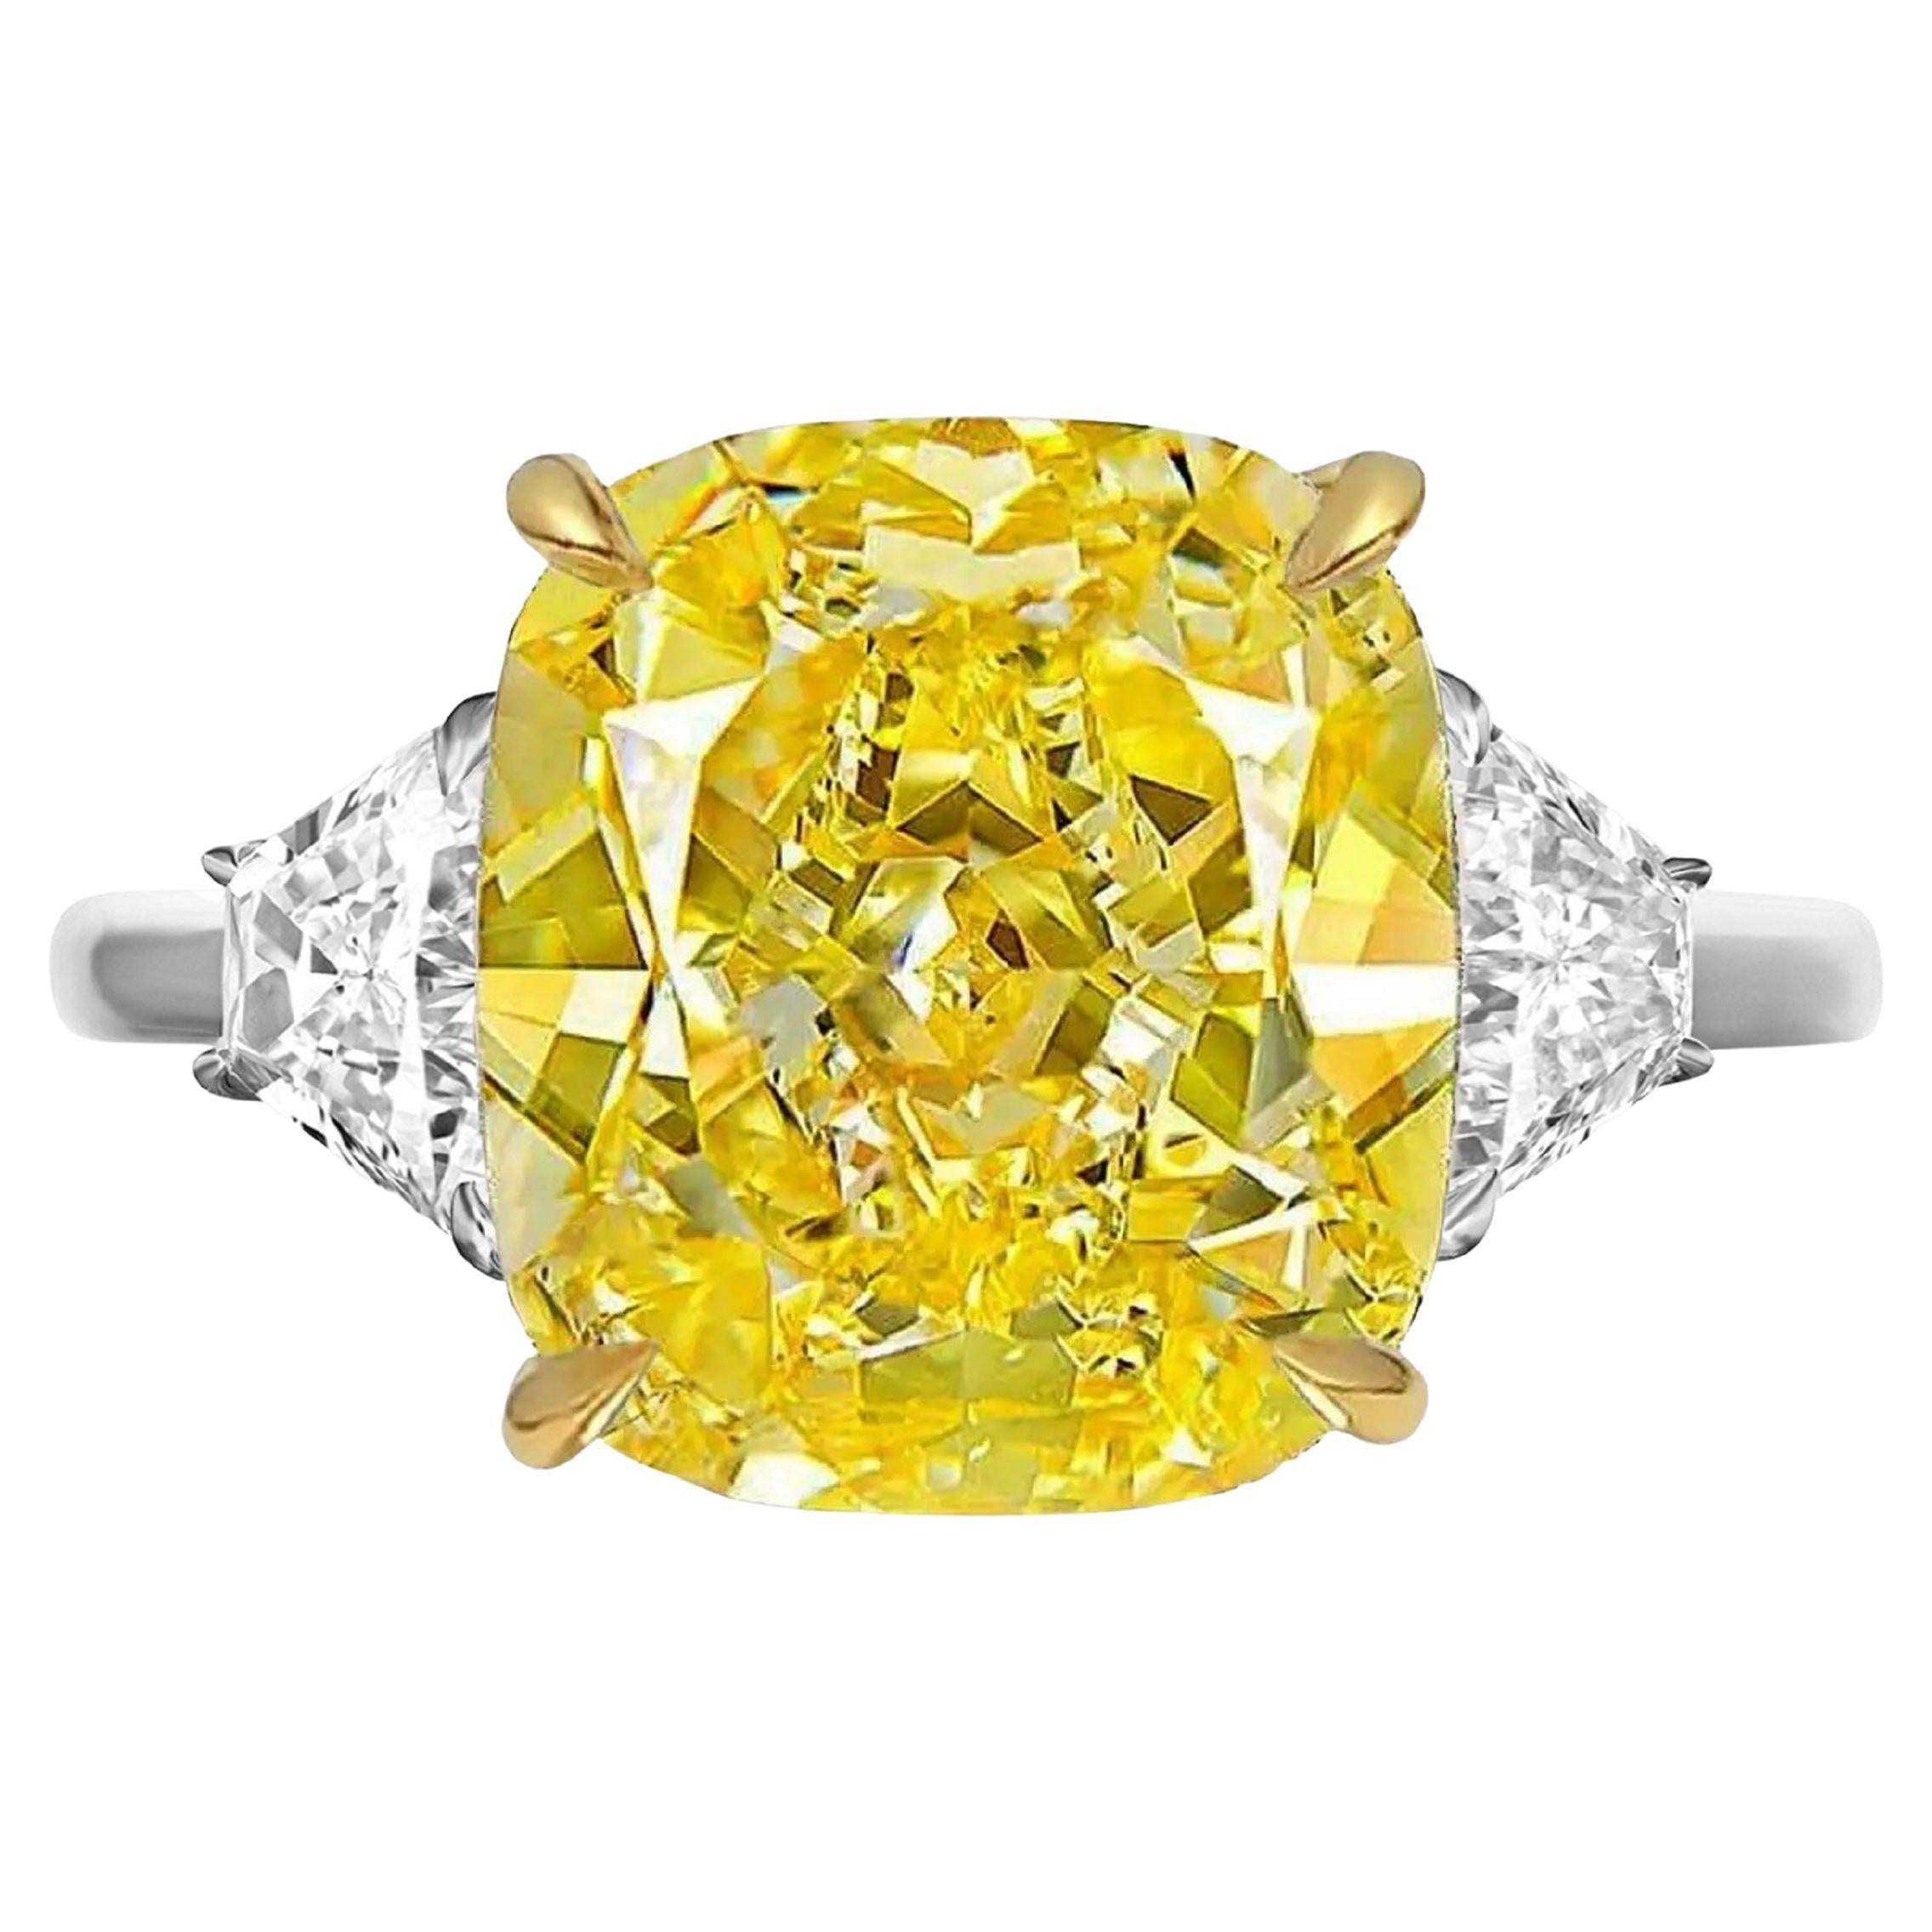 I Flawless GIA Certified 4.30 Carat Fancy Yellow Diamond Ring